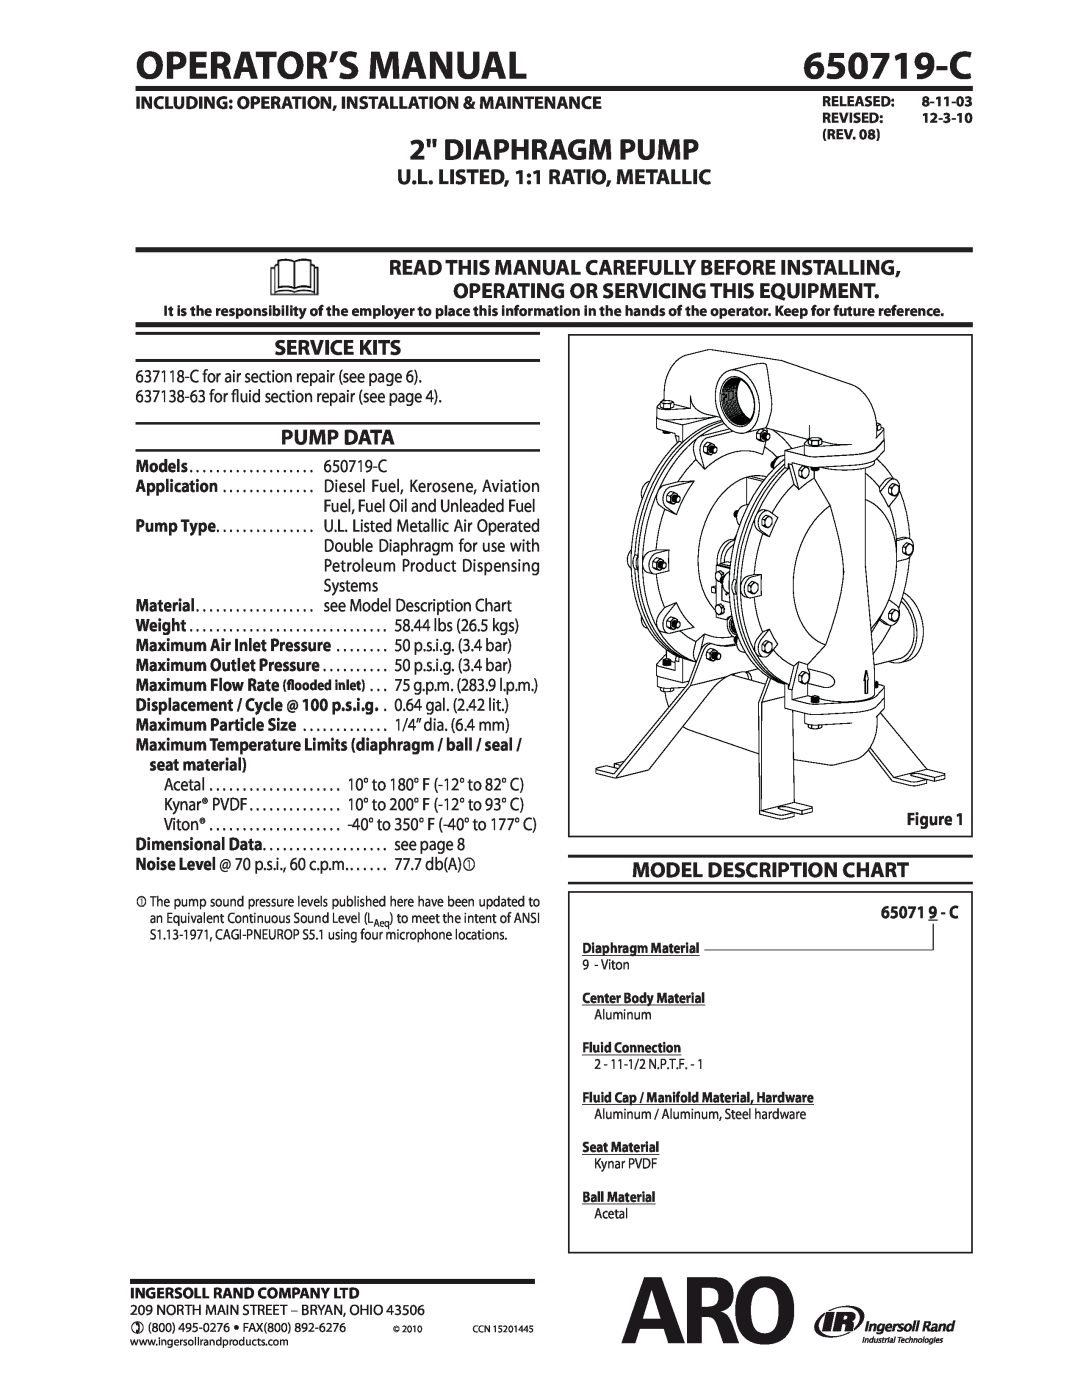 Ingersoll-Rand 650719-C manual U.L. LISTED, 1 1 RATIO, METALLIC, Read This Manual Carefully Before Installing, Pump Data 